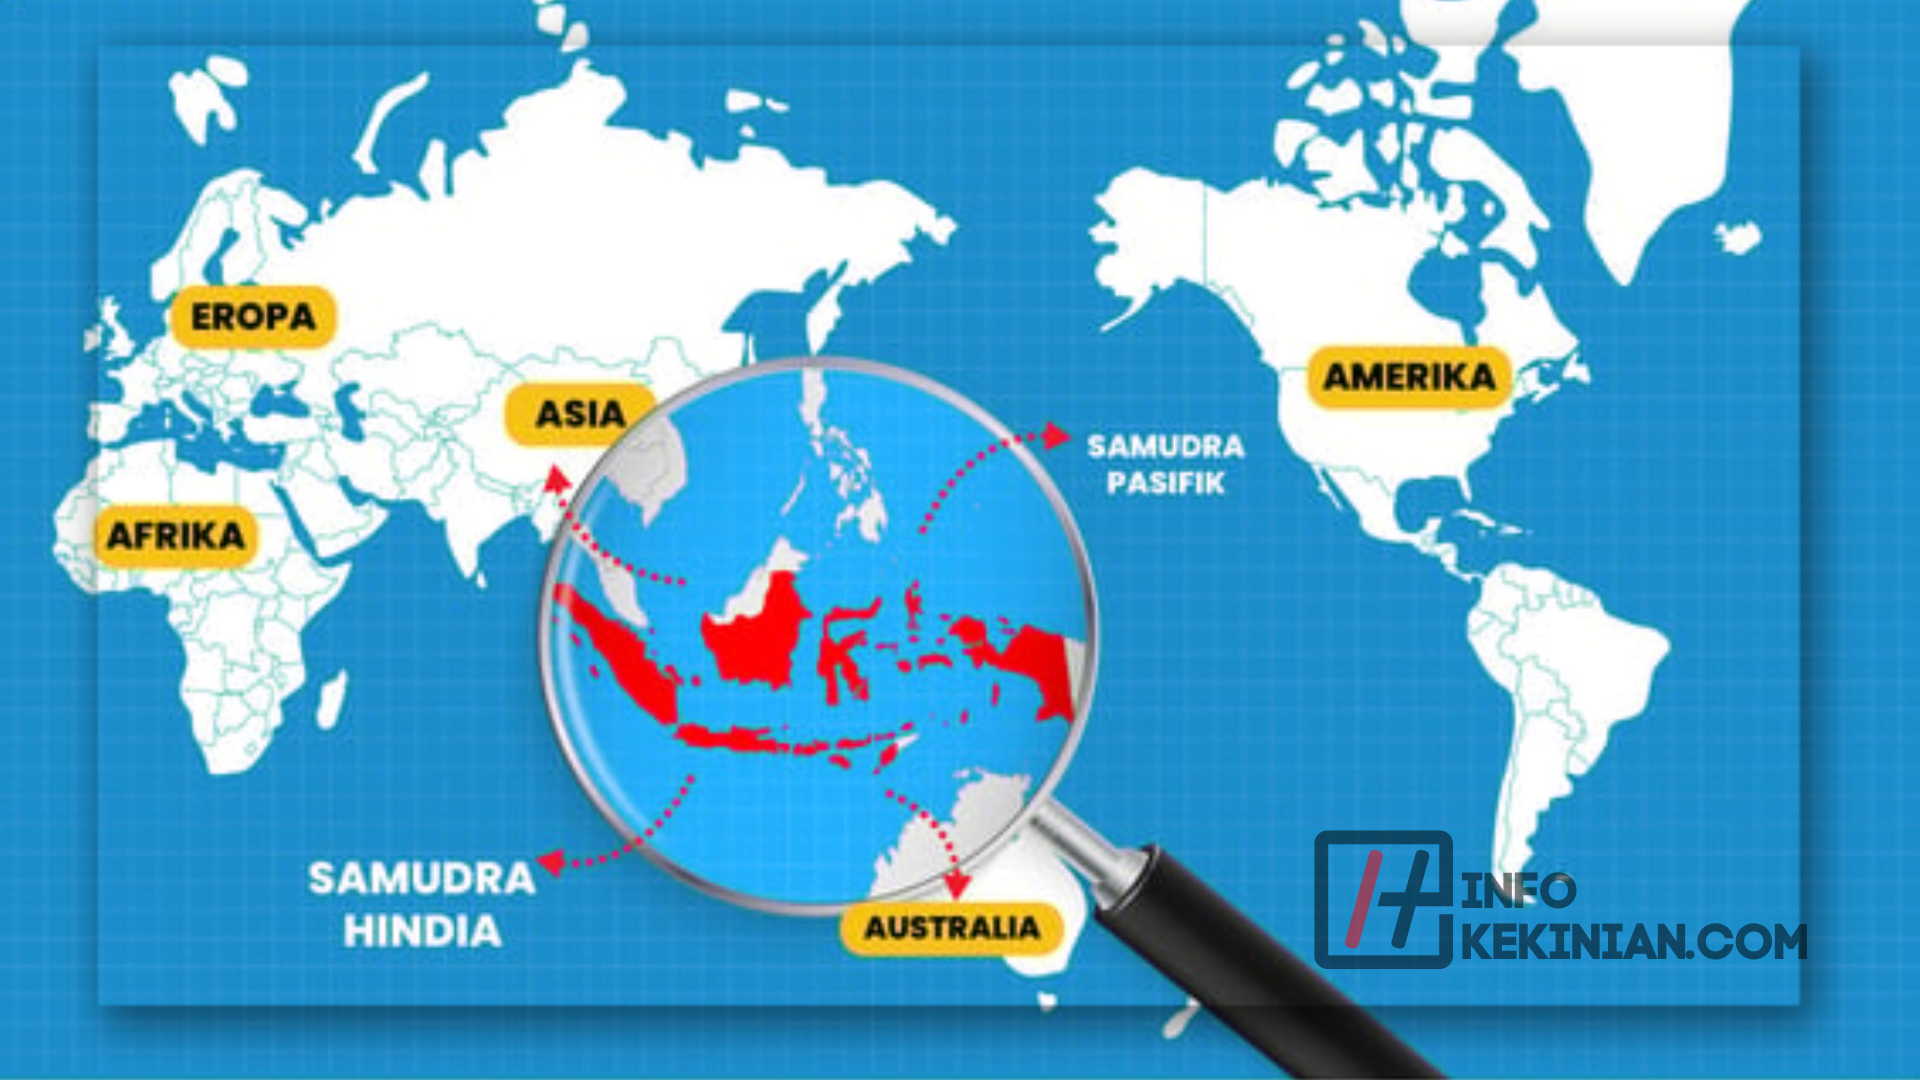 Letak Geografis Indonesia